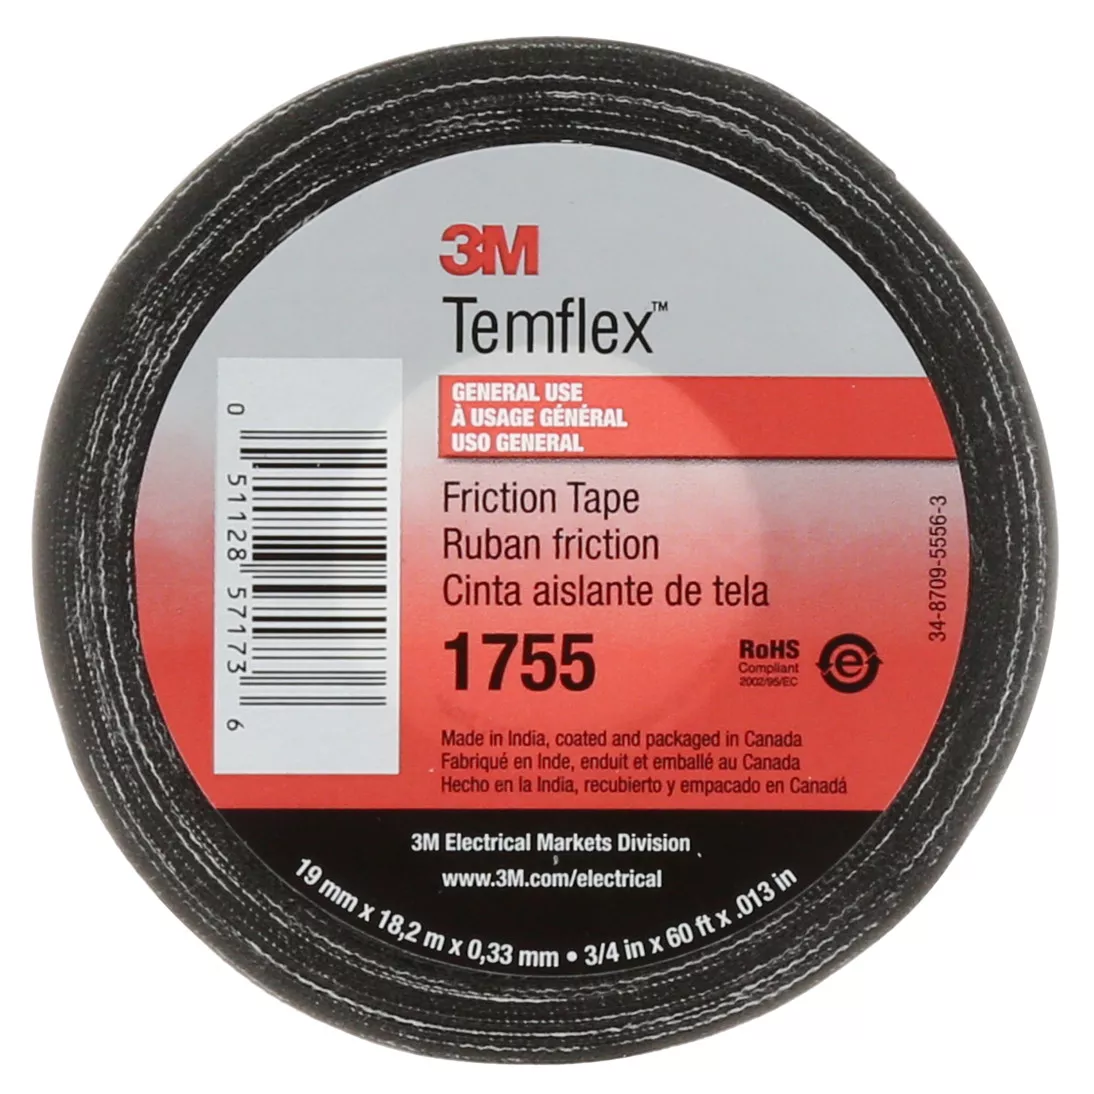 3M™ Temflex™ Cotton Friction Tape 1755, 3/4 in x 60 ft, Black, 20
rolls/Case